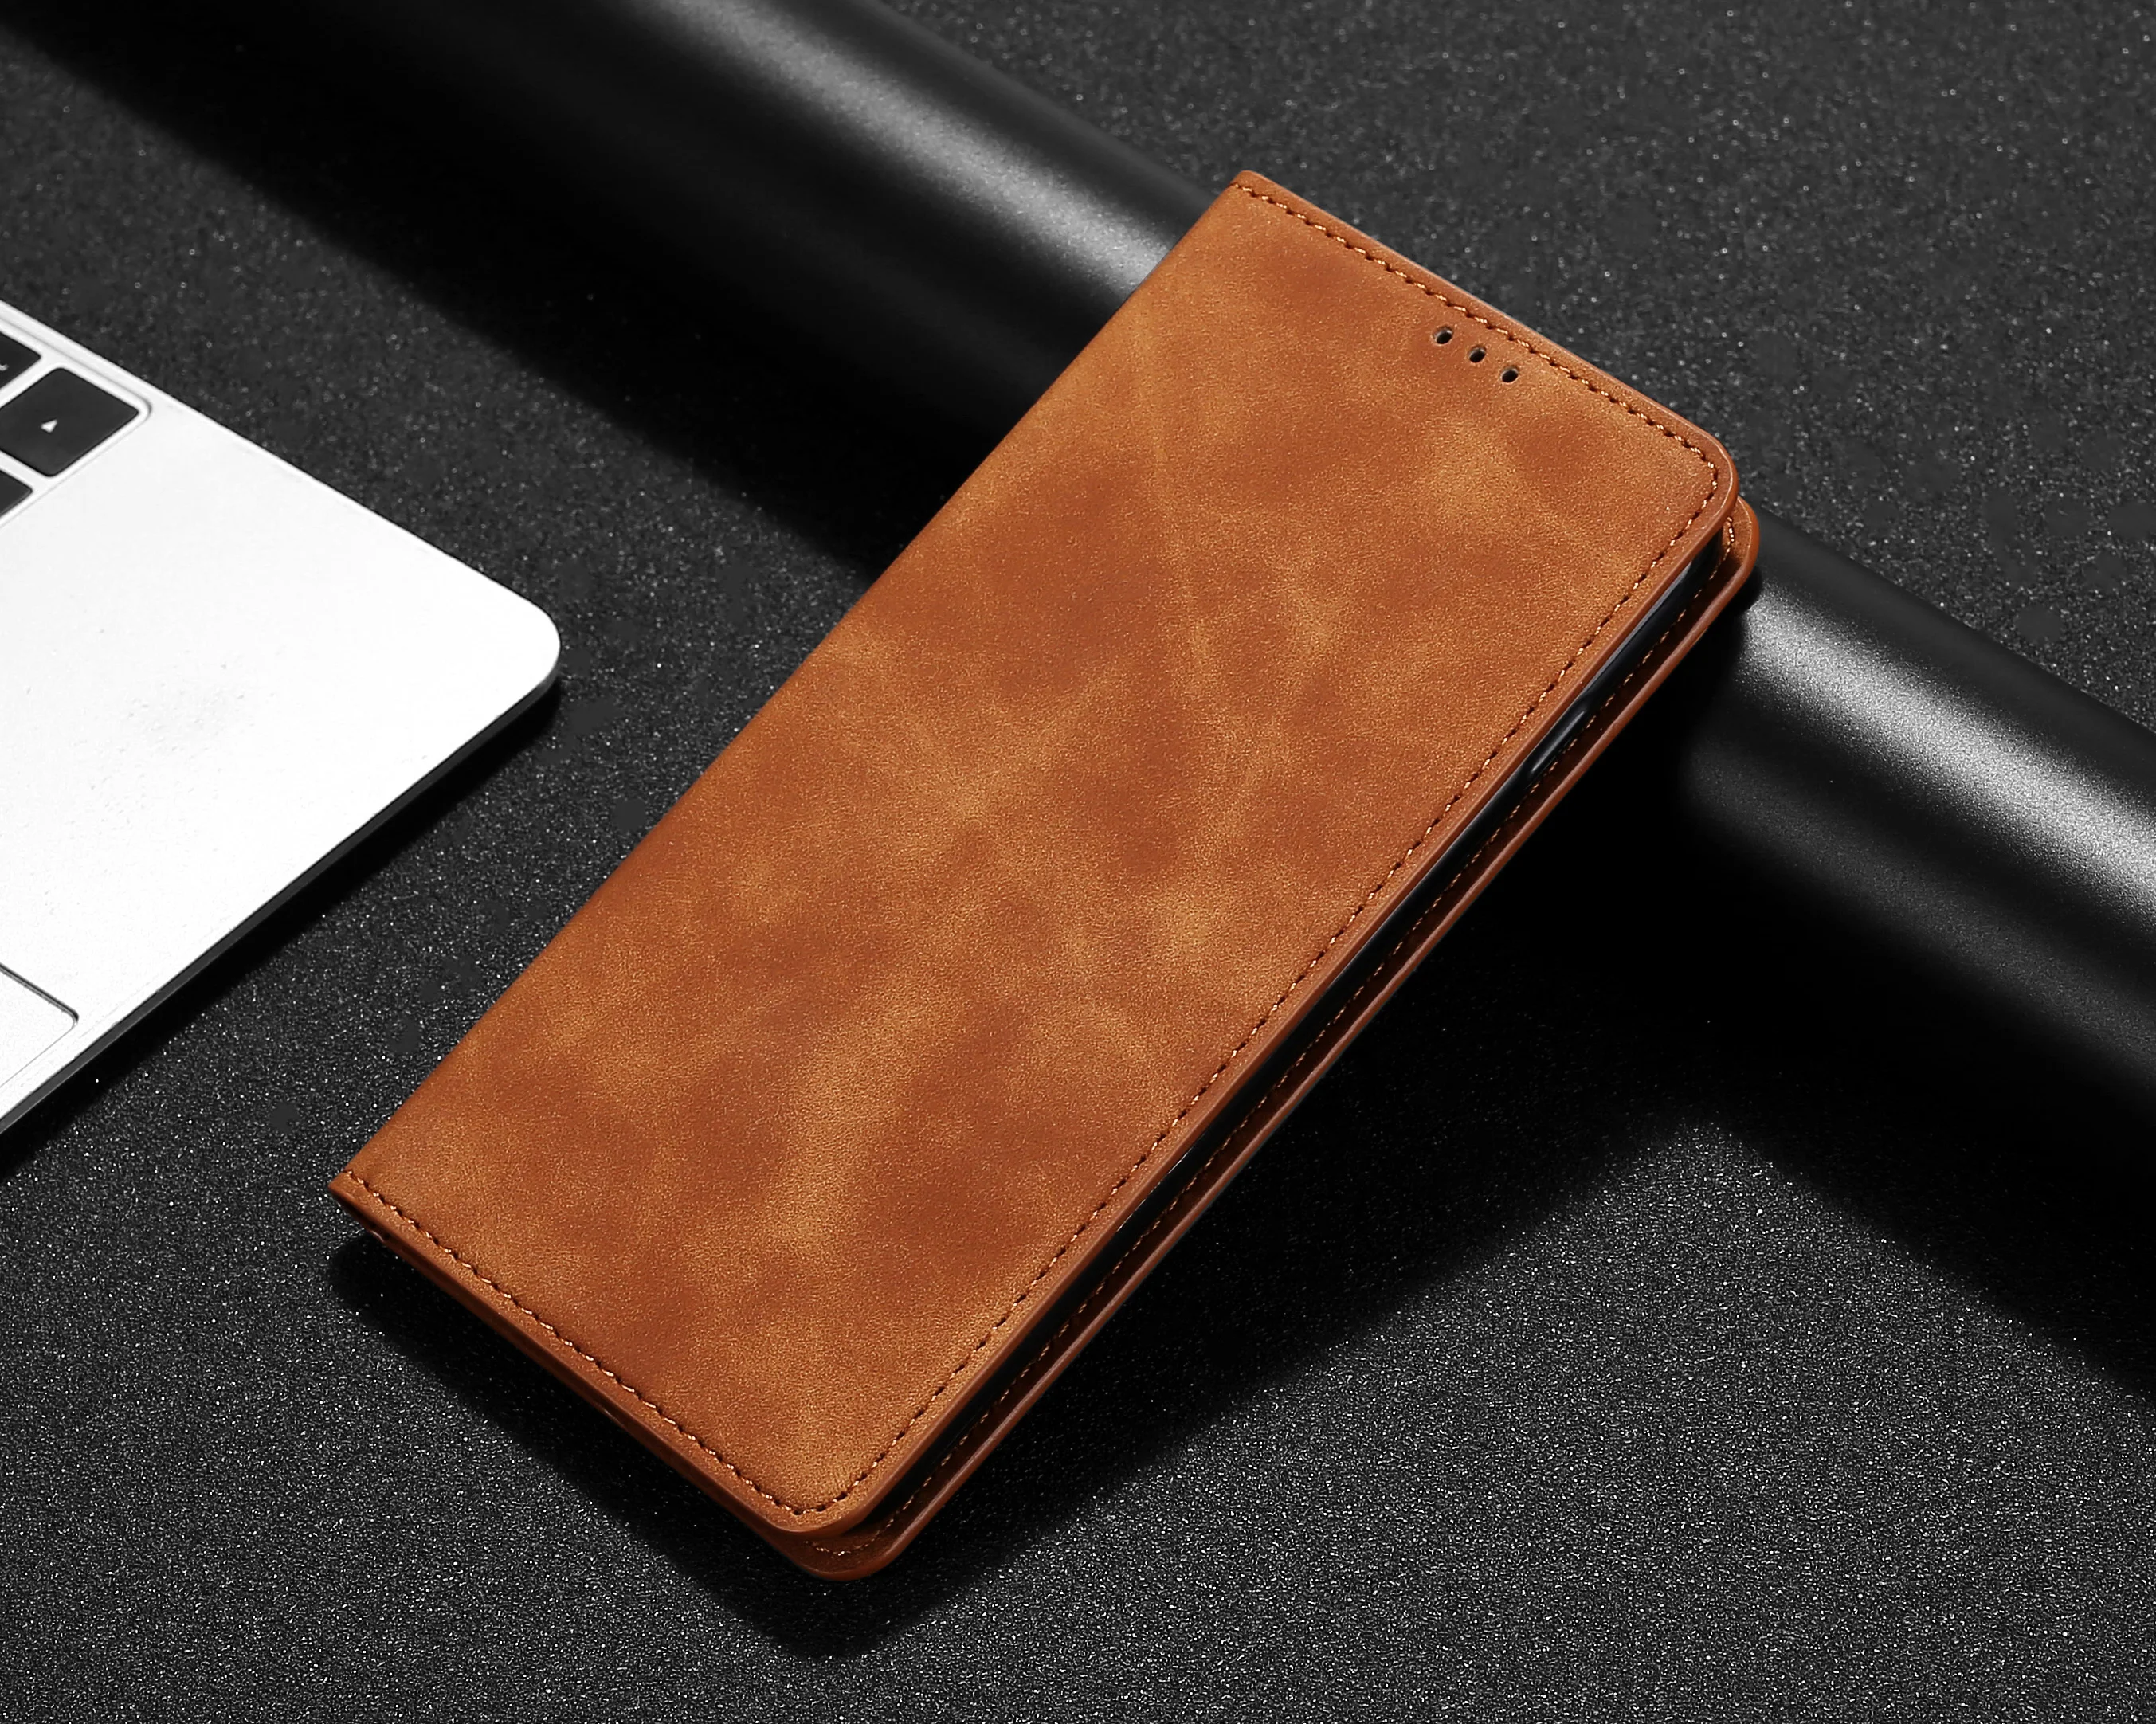 xiaomi leather case chain Magnetic Leather Book Flip Phone Case For Xiaomi Mi 9 A3 A2 Lite A1 Card Holder Cover For Redmi Note 8 7 5 6 Pro 4X 4 6A Plus 8T xiaomi leather case card